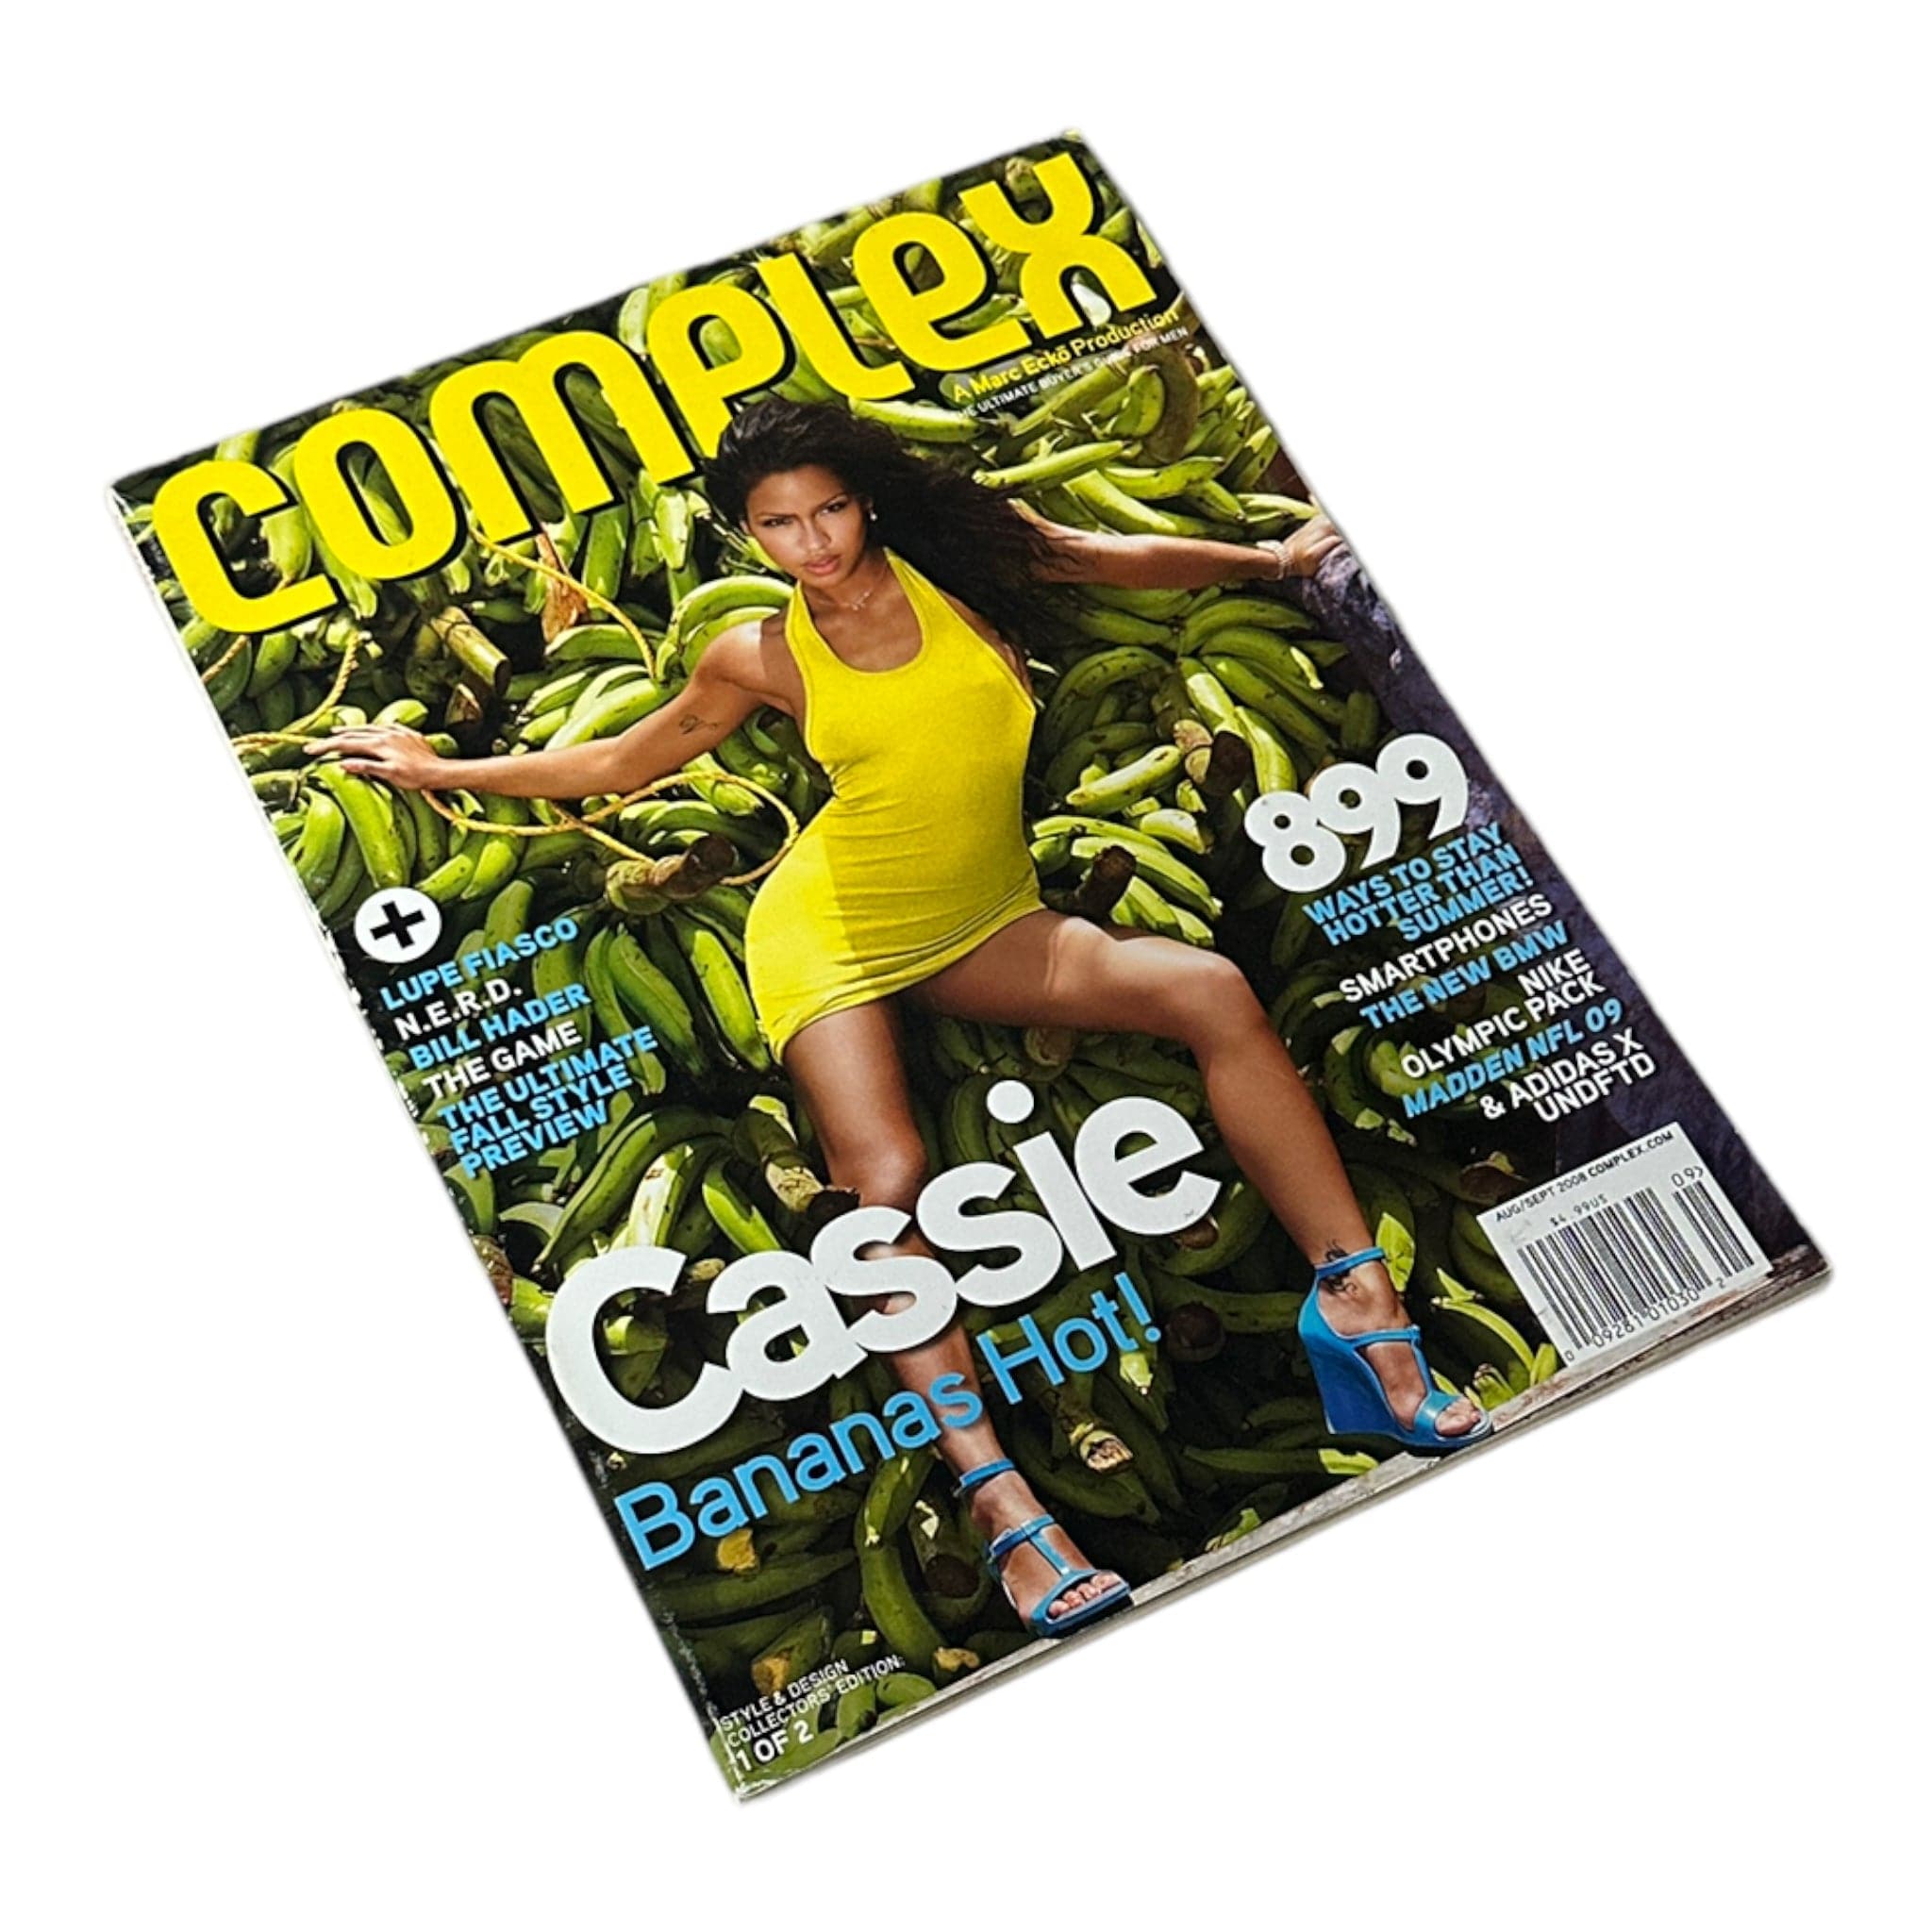 COMPLEX MAGAZINE - PHARRELL & CASSIE DOUBLE COVER - The Magnolia Park